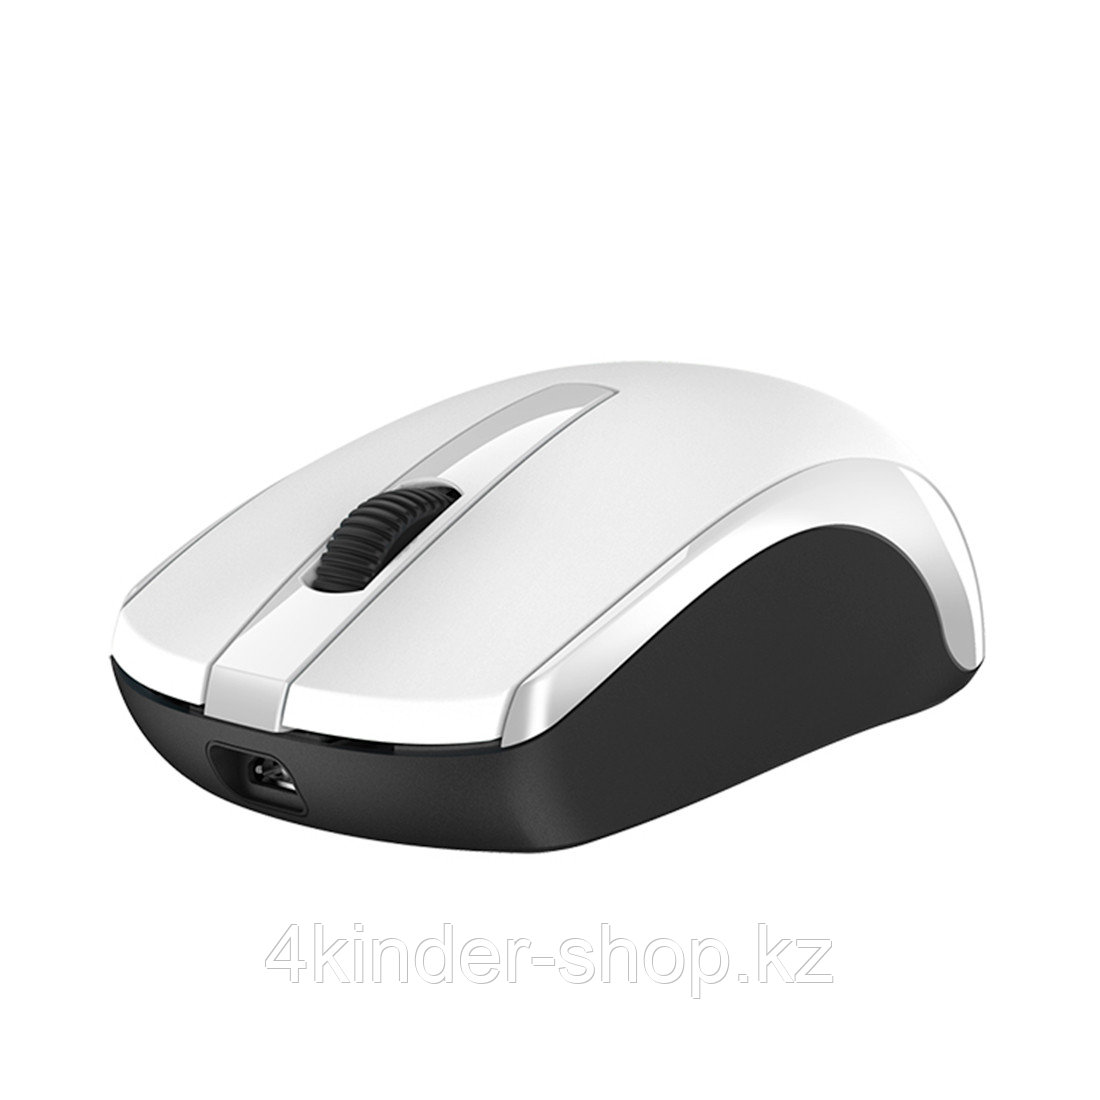 Компьютерная мышь Genius ECO-8100 White